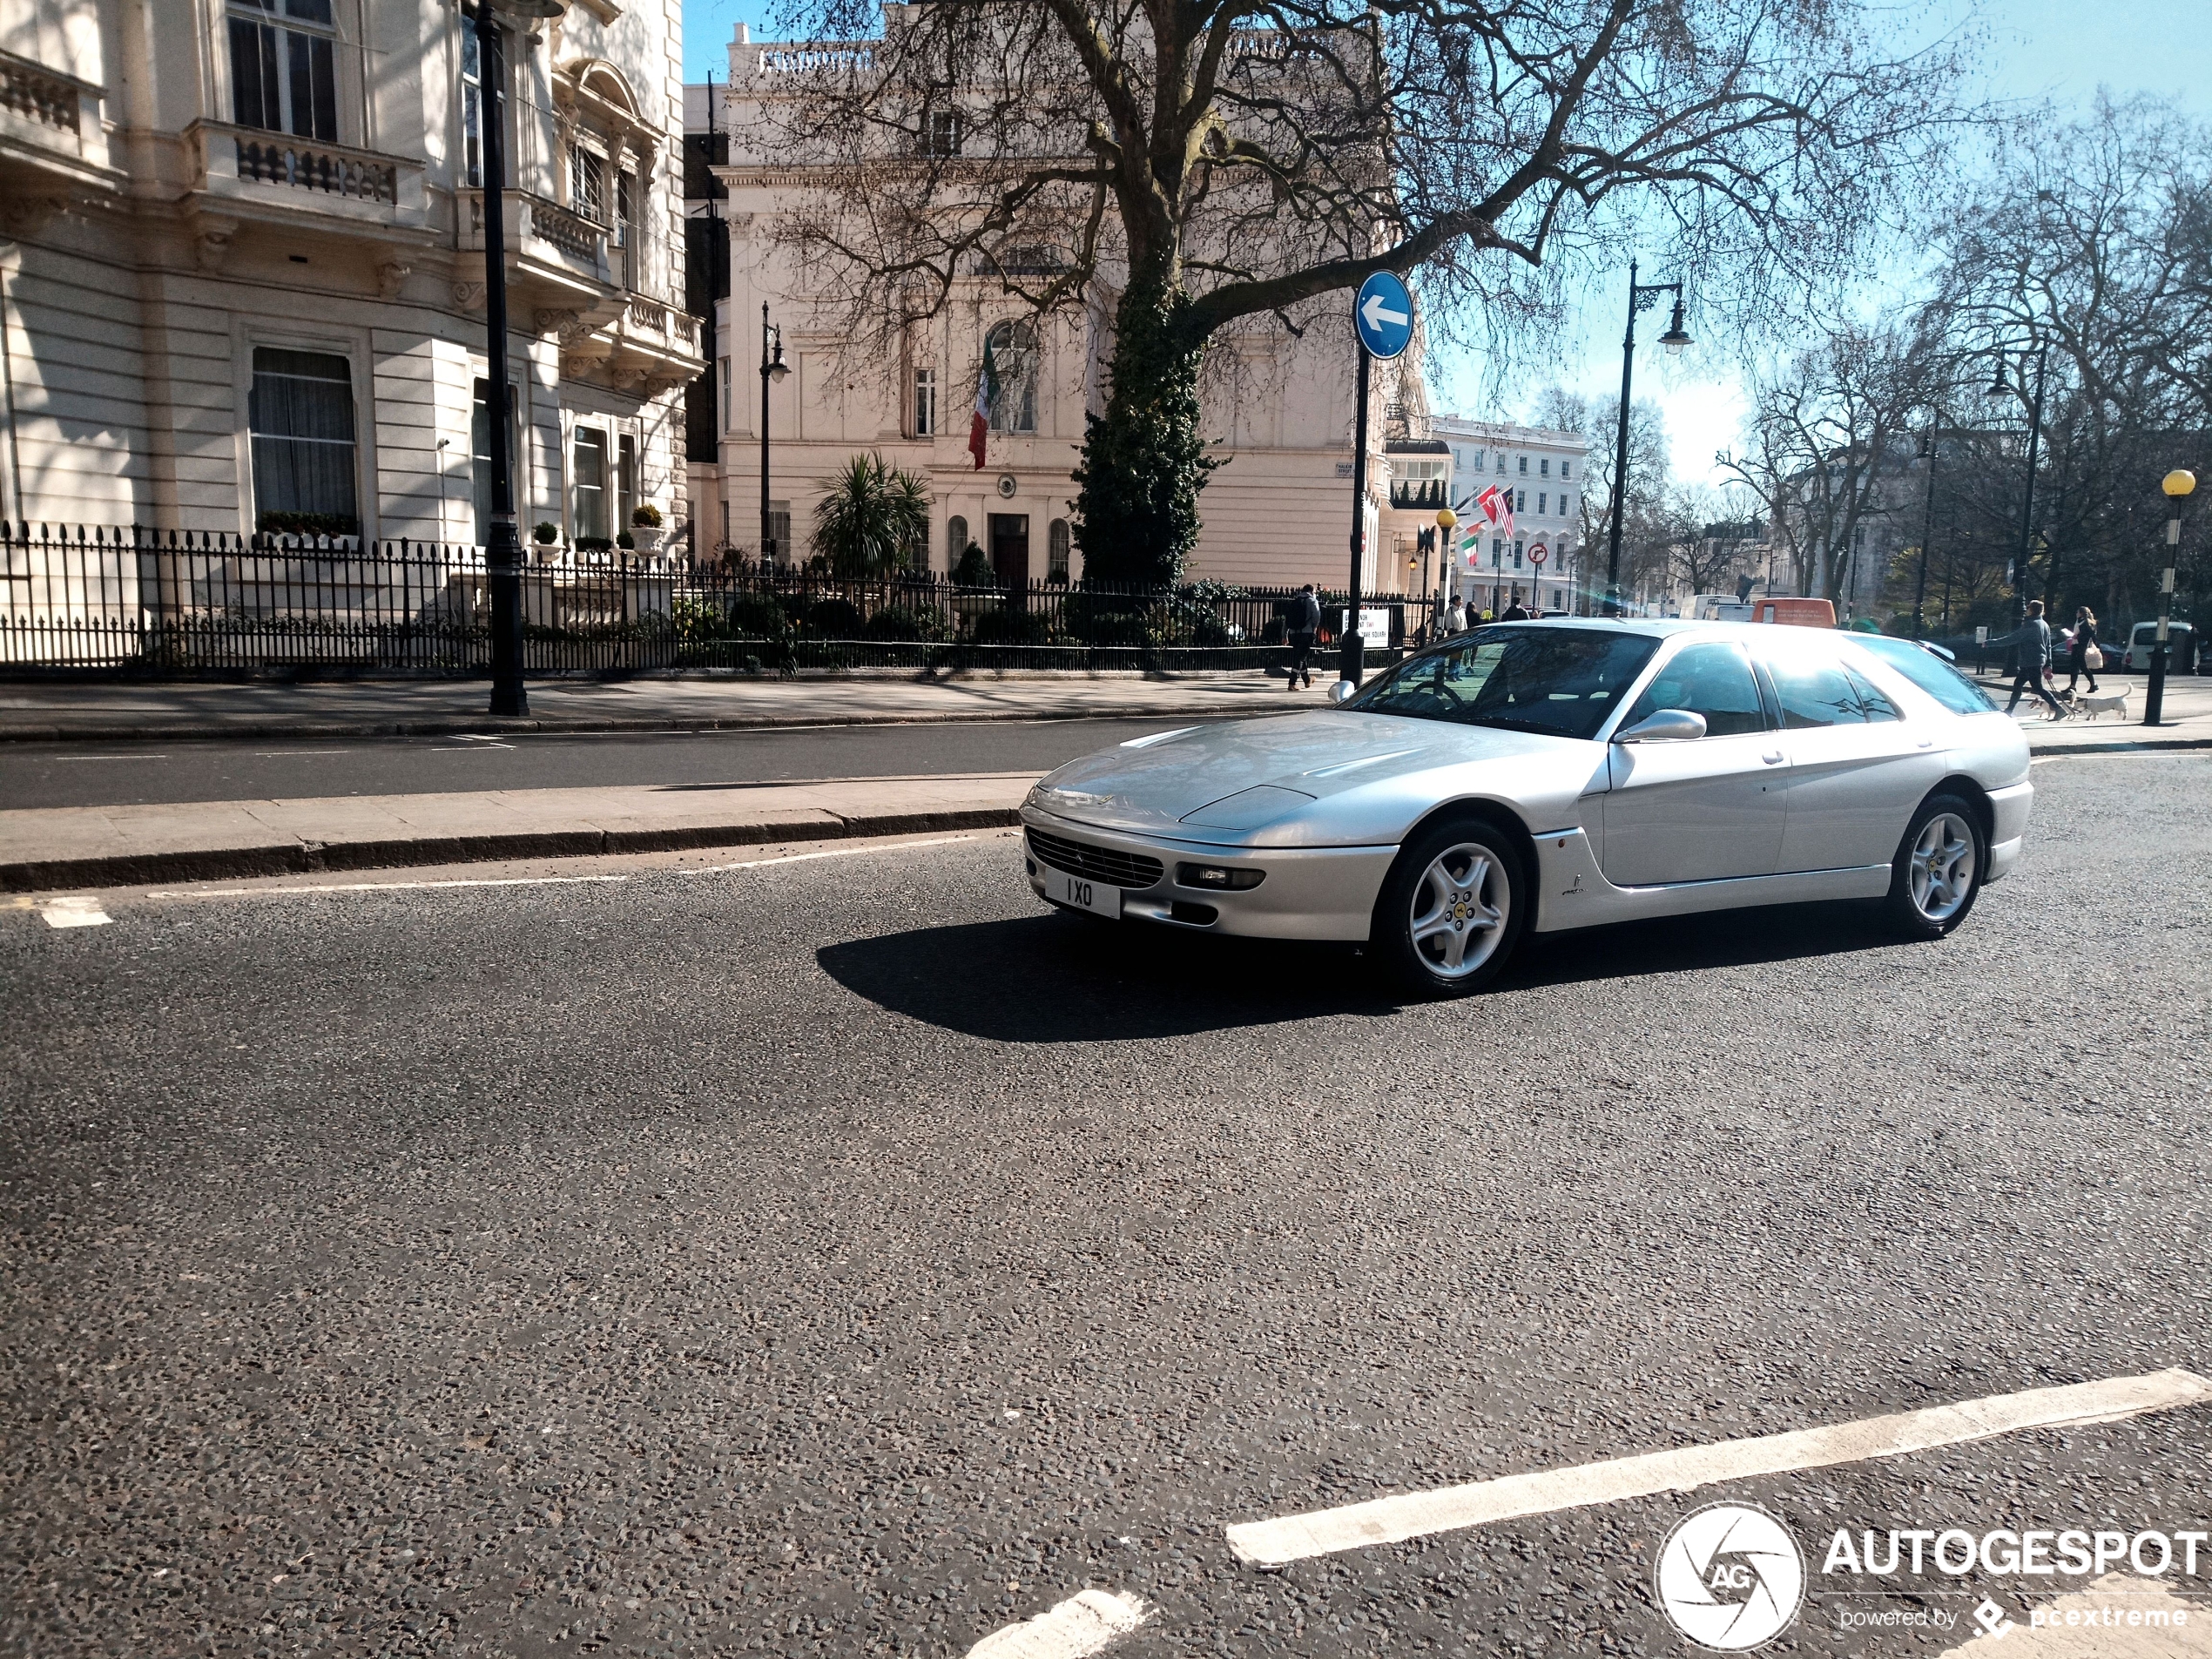 Ferrari 456 GT Venice is still driving around London